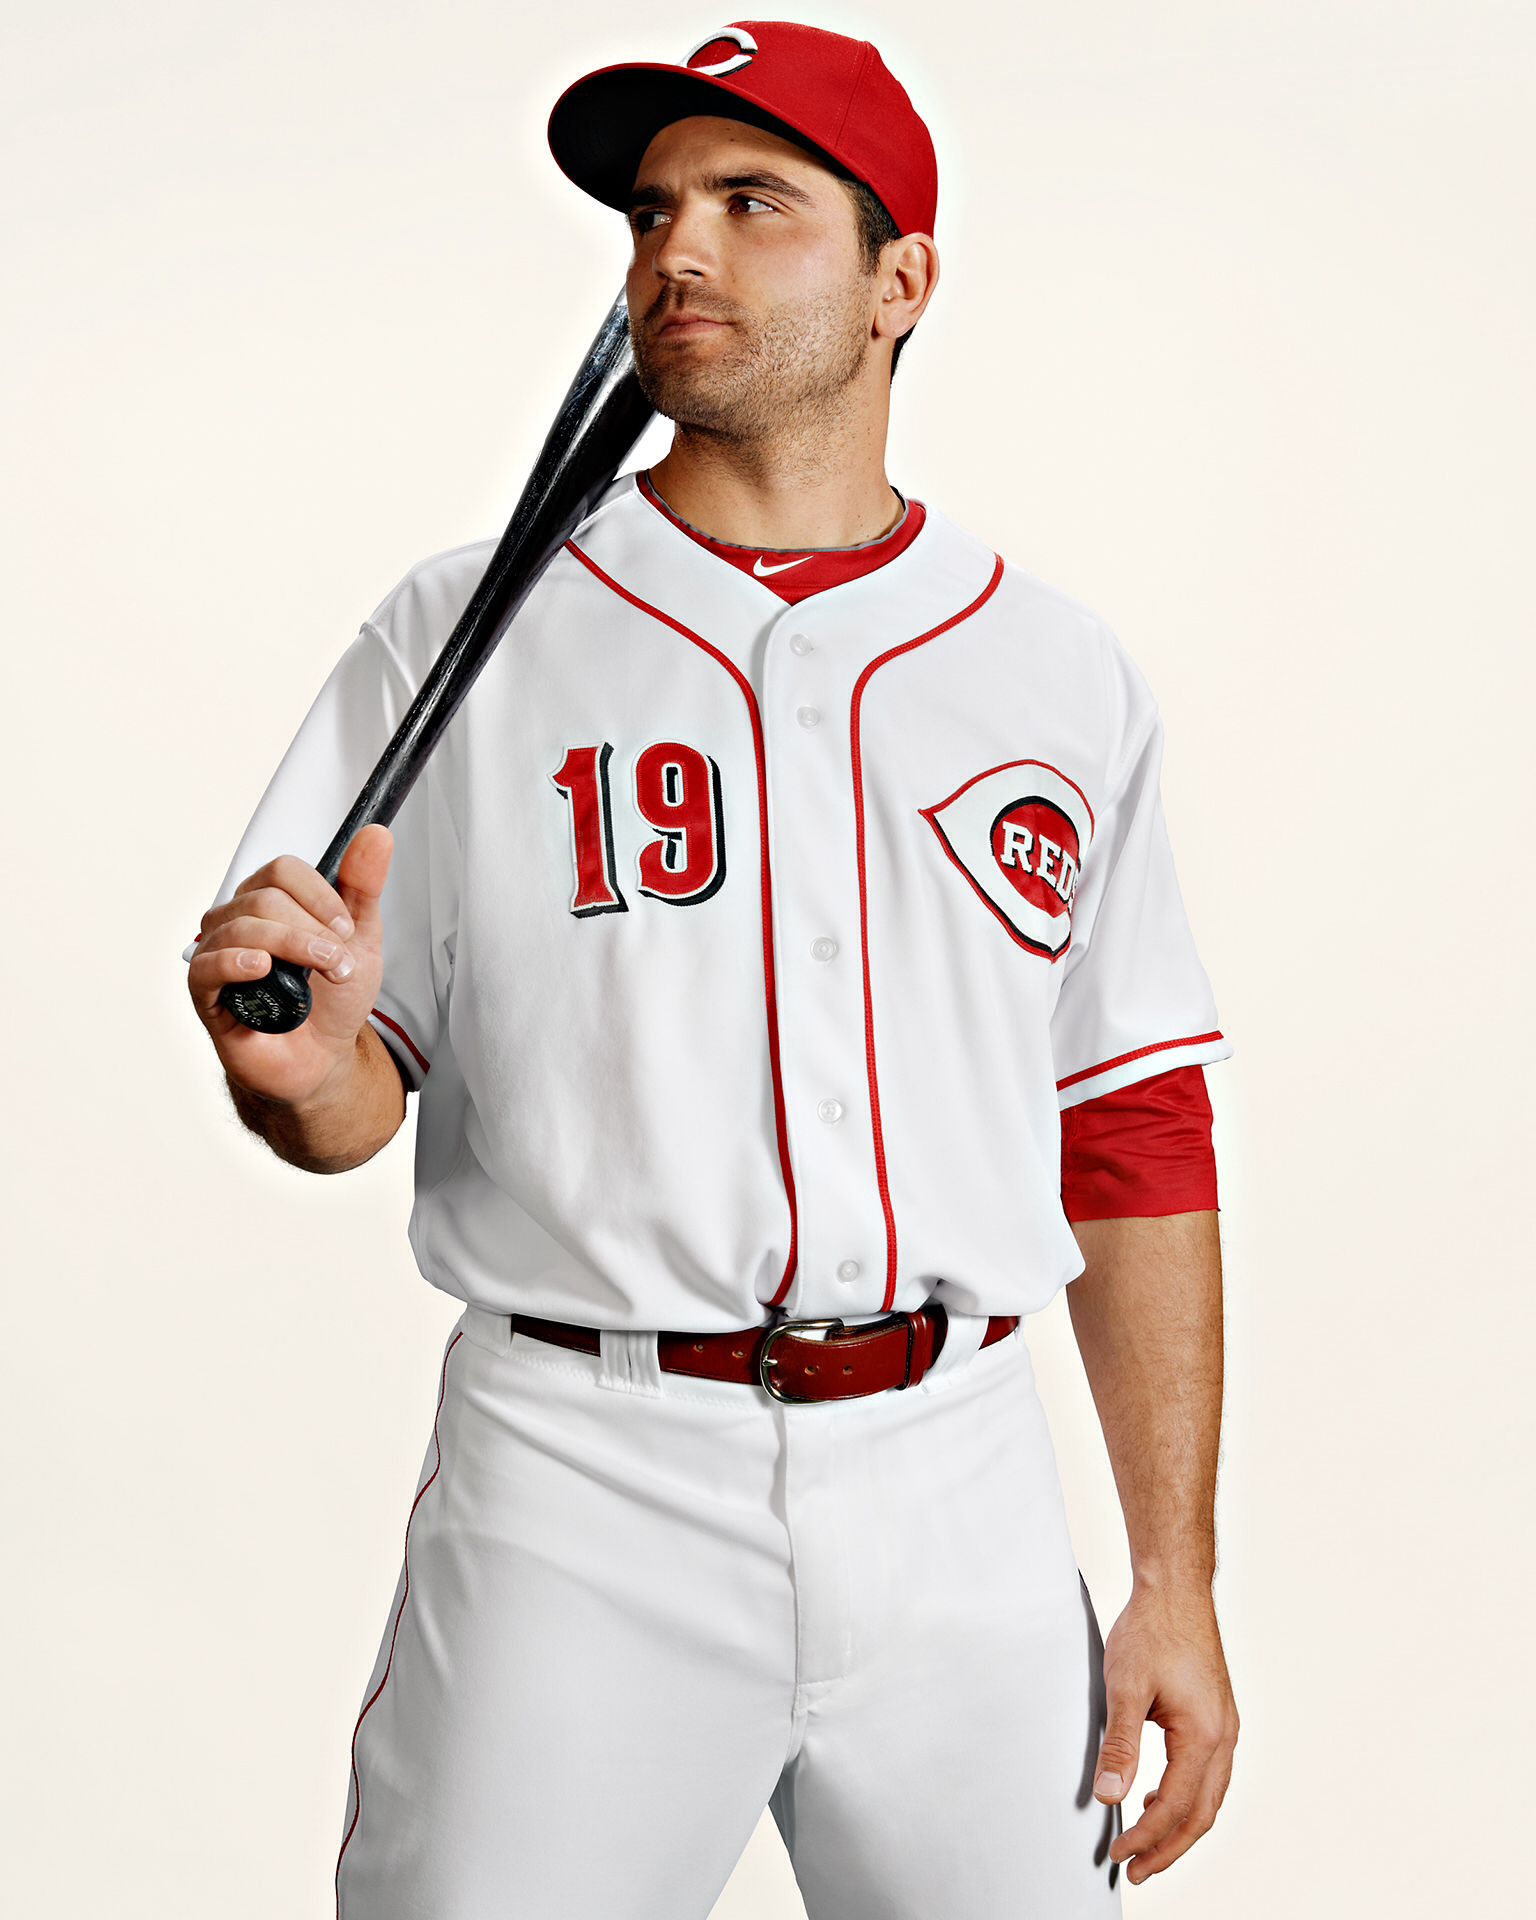 Joey Votto, Baseball Wiki